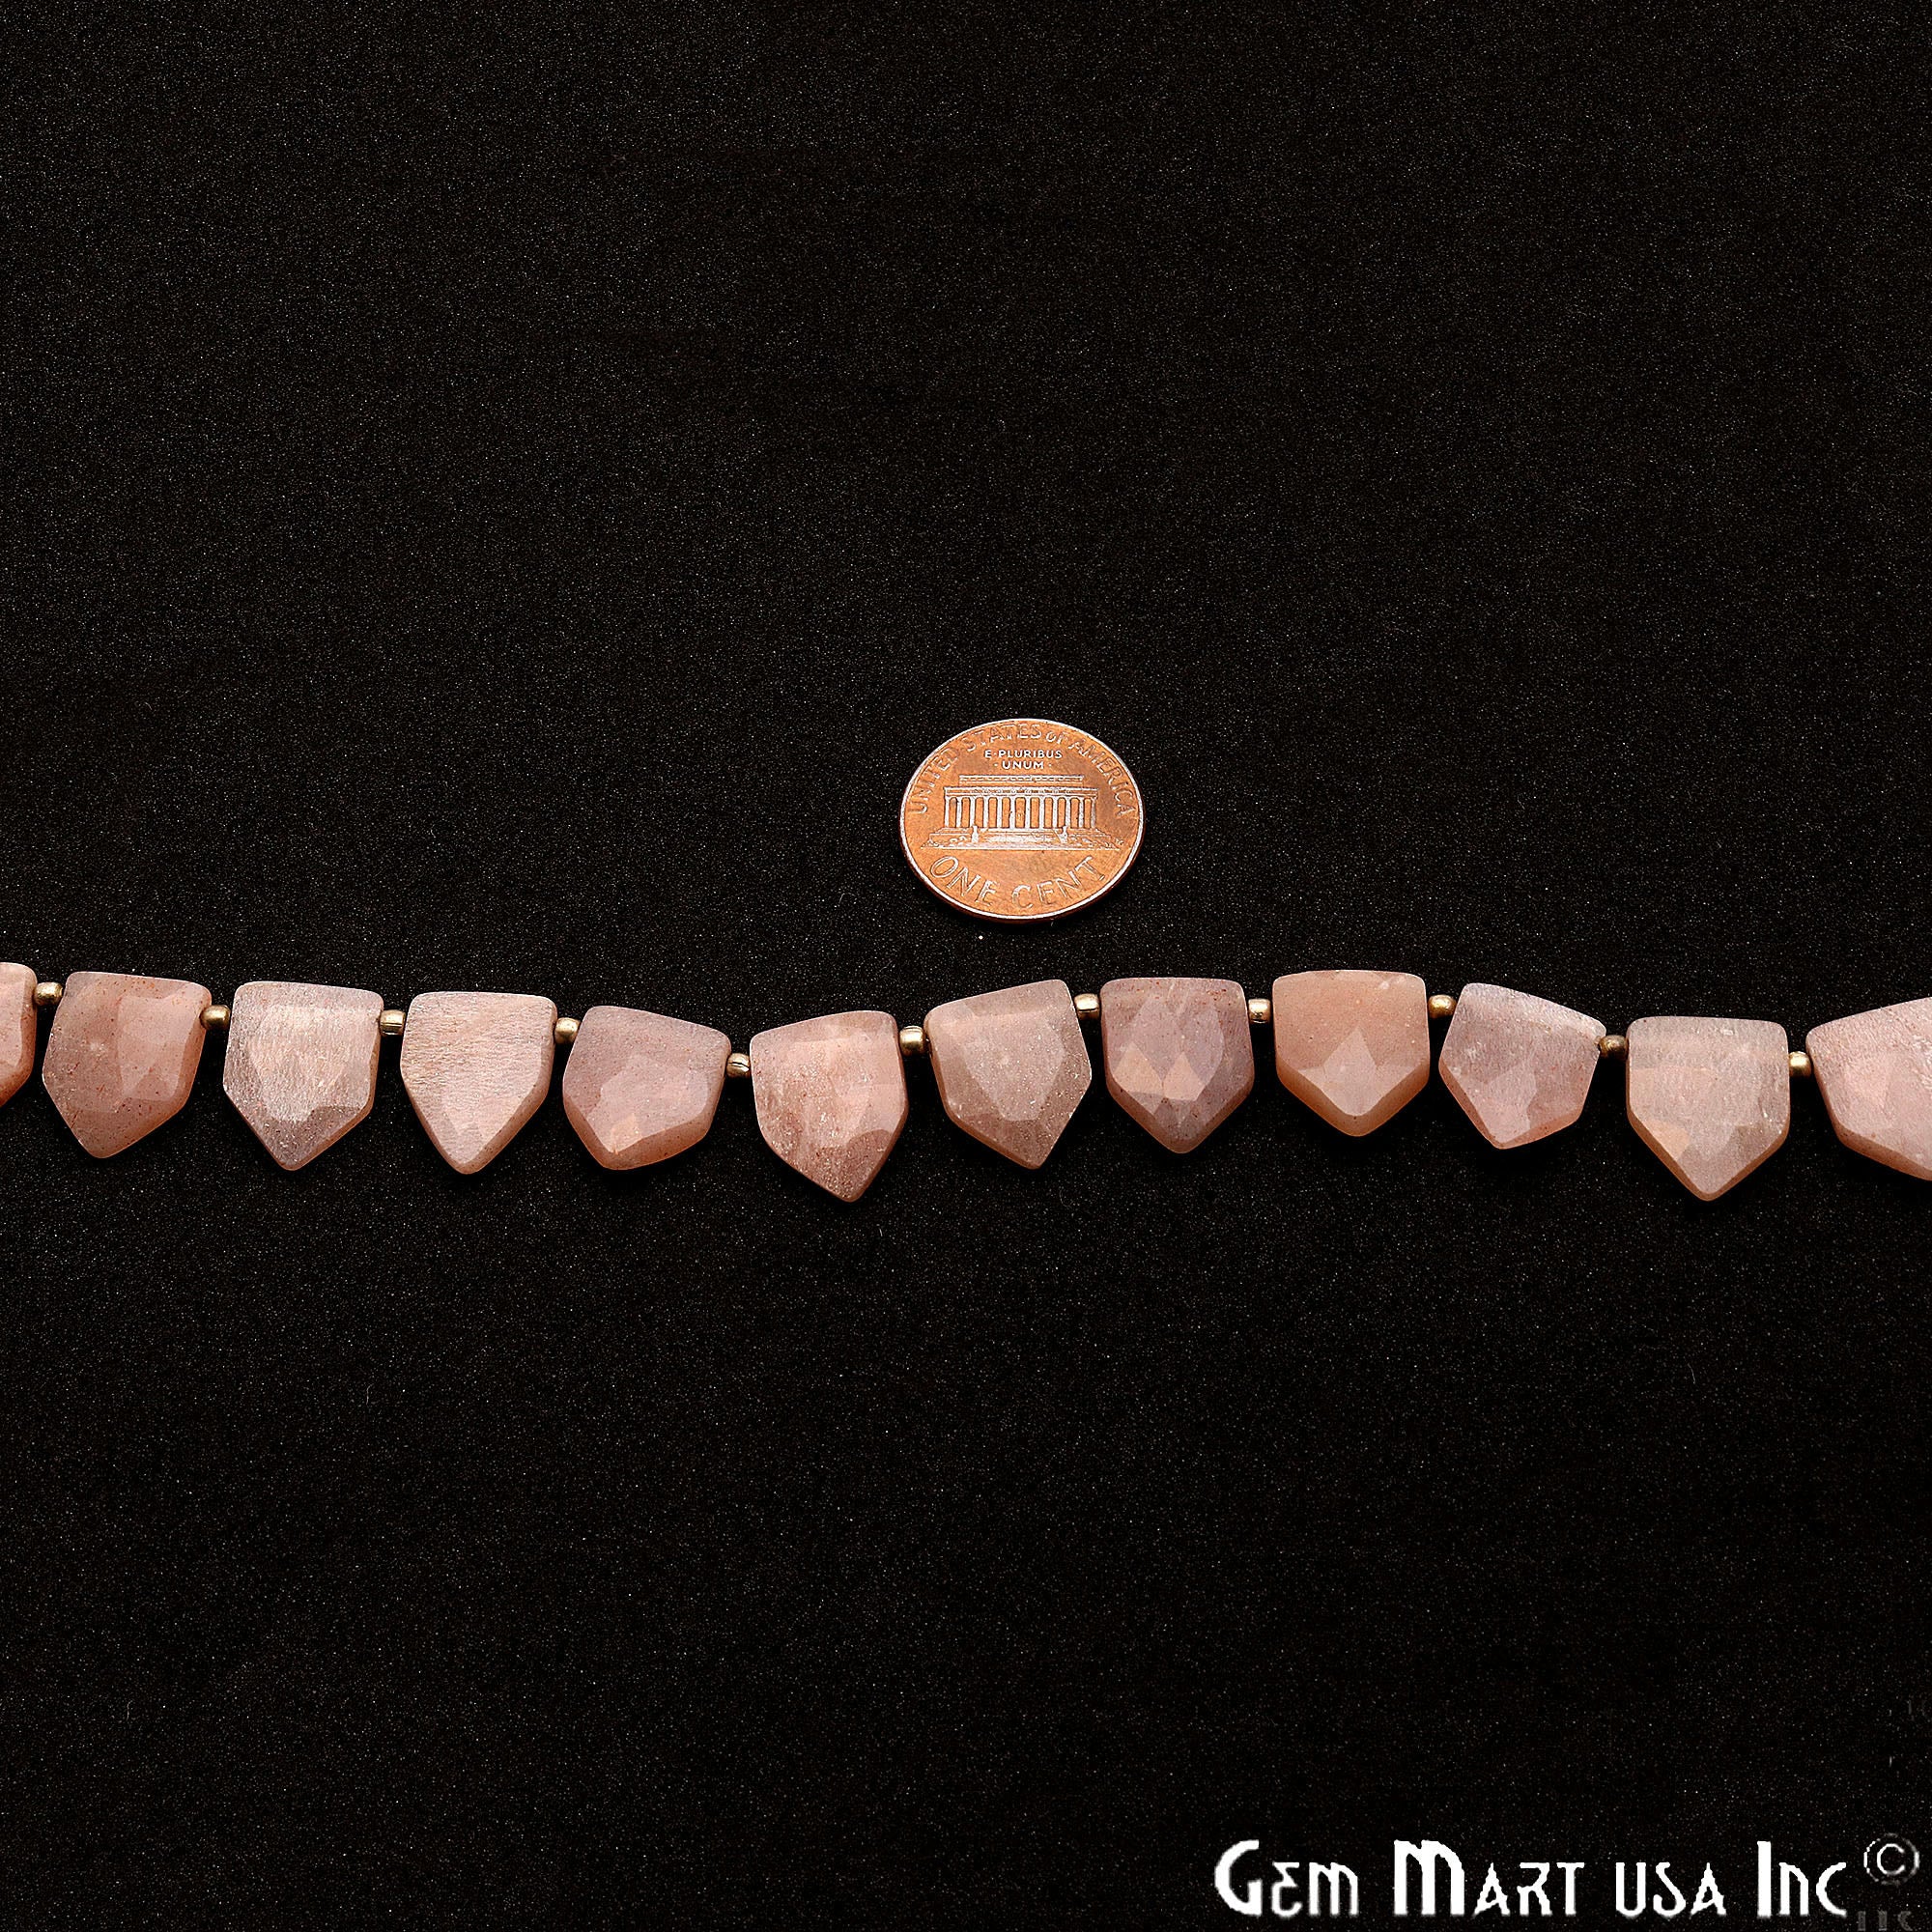 Peach Moonstone Pentagon 14x10mm Crafting Beads Gemstone Briolette Strands 8 Inch - GemMartUSA